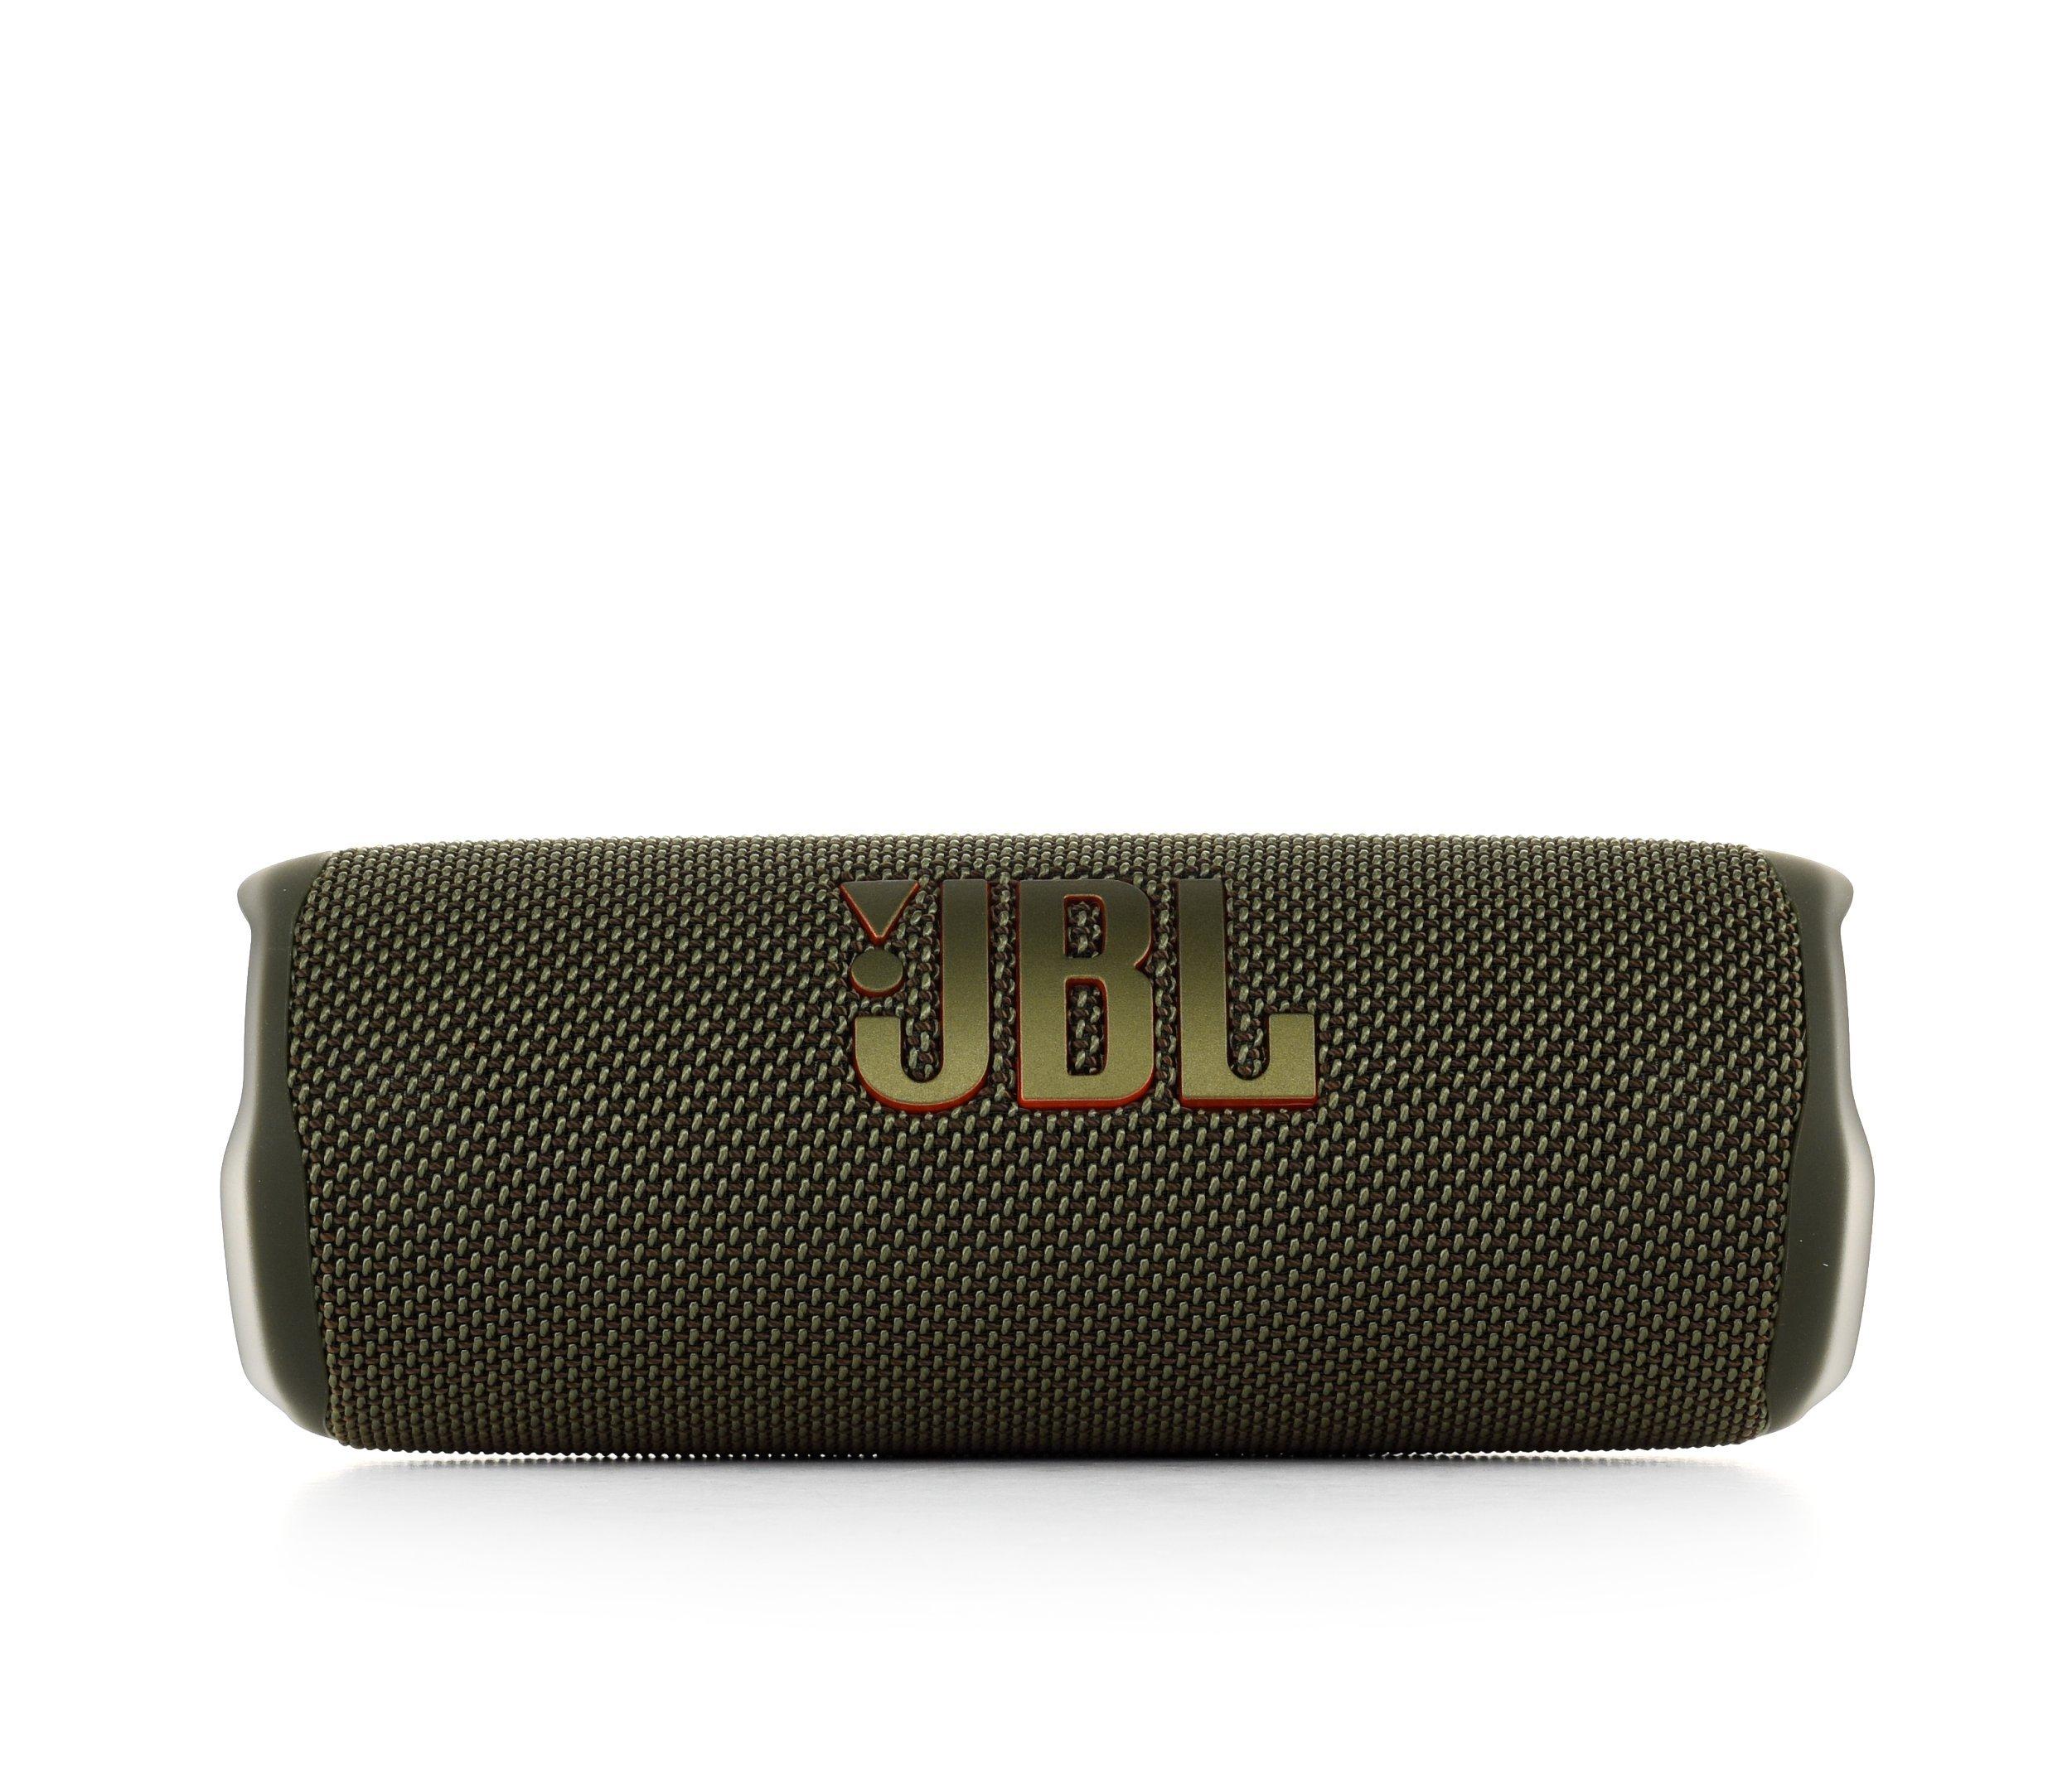  JBL Flip 6 - Waterproof Portable Bluetooth Speaker